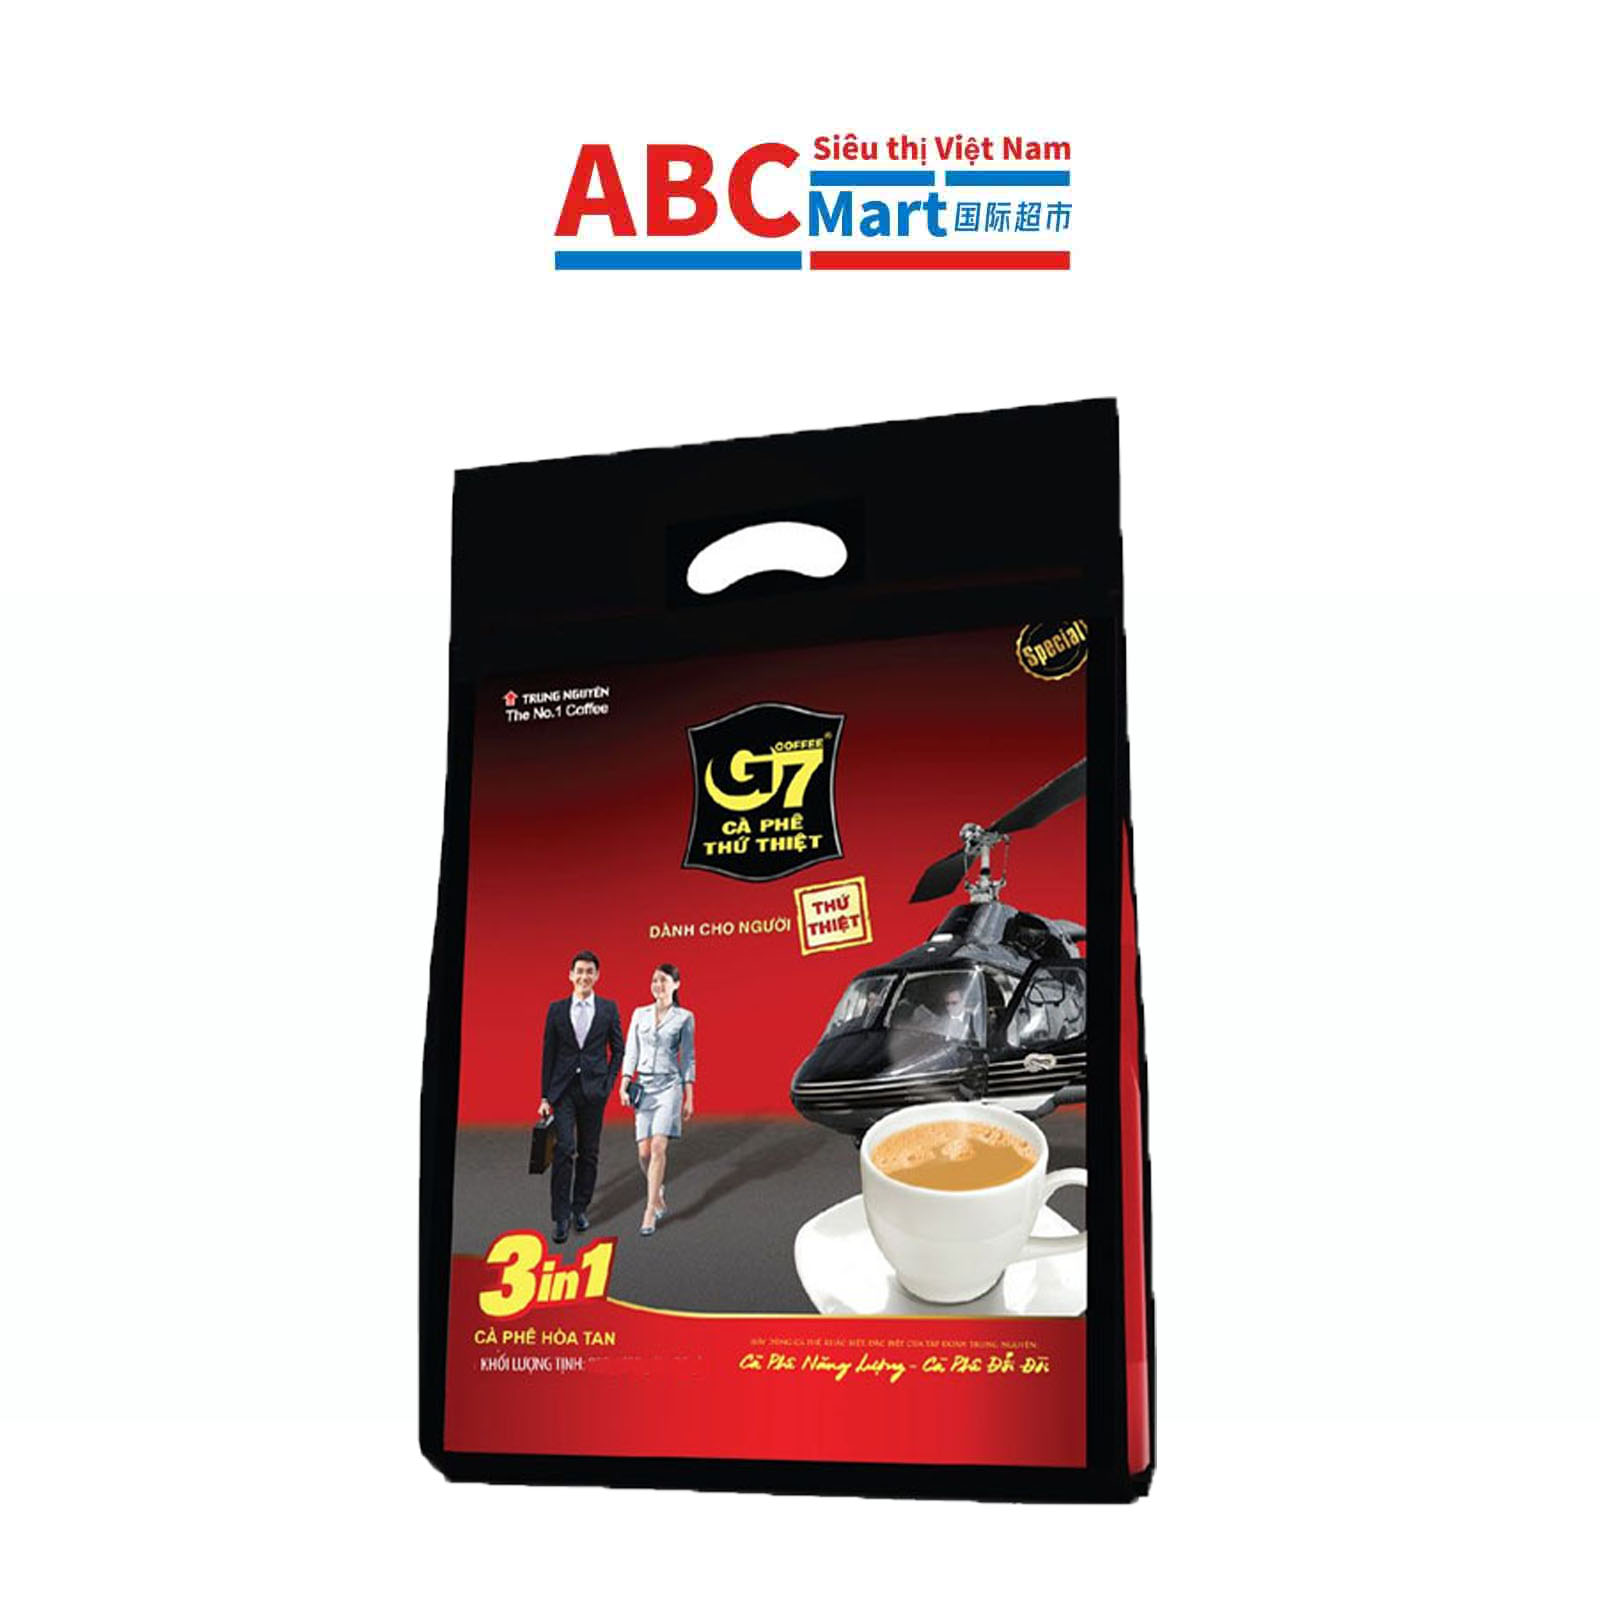 【Việt Nam- TrungNguyen G7 3in1 milk coffee】中原G7三合一牛奶咖啡-ABCMart 国际超市